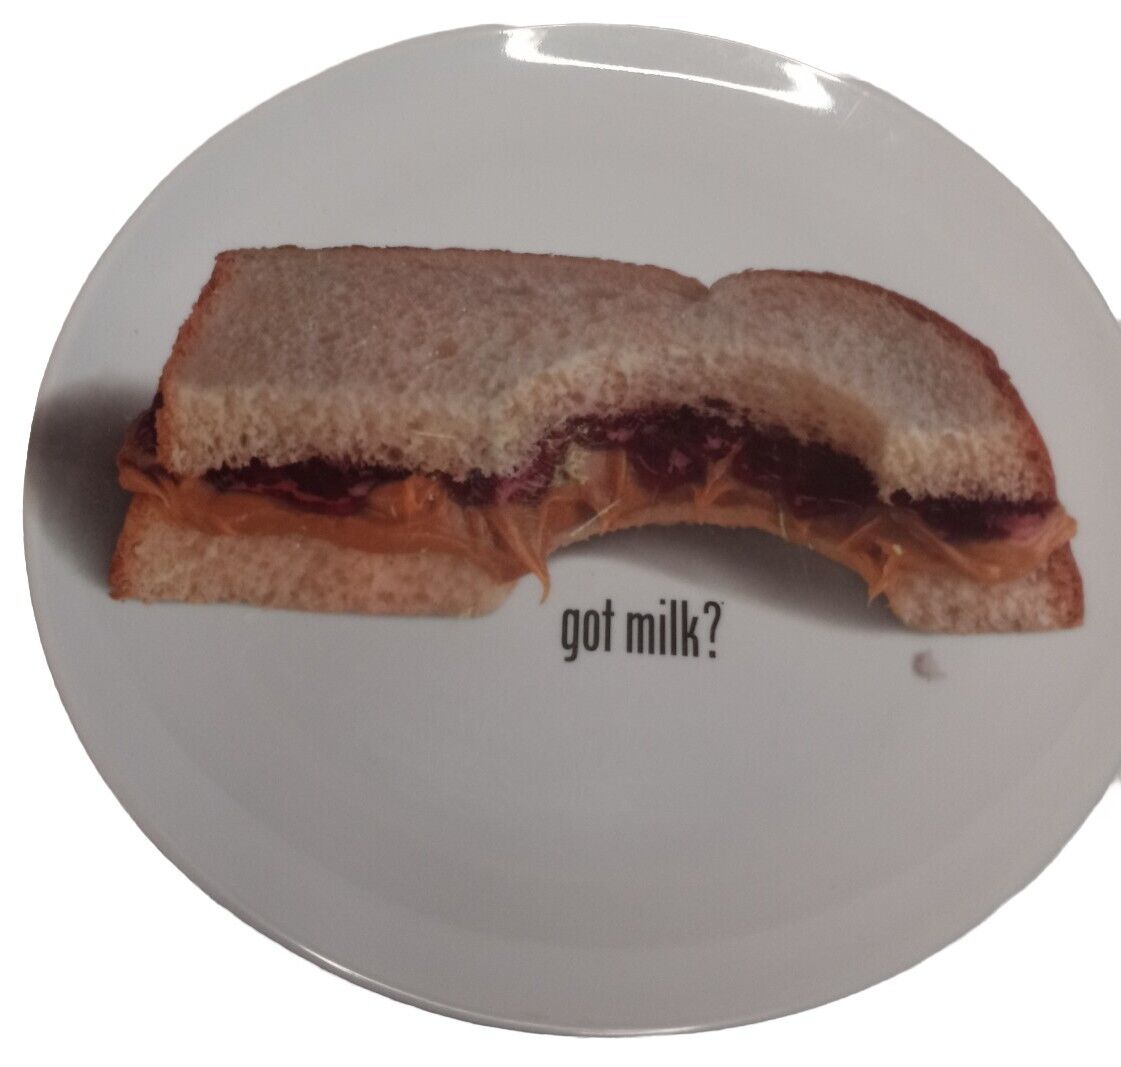 Vintage 1999 “Got Milk?” PB&J Sandwich Plate by At Home International 8in.